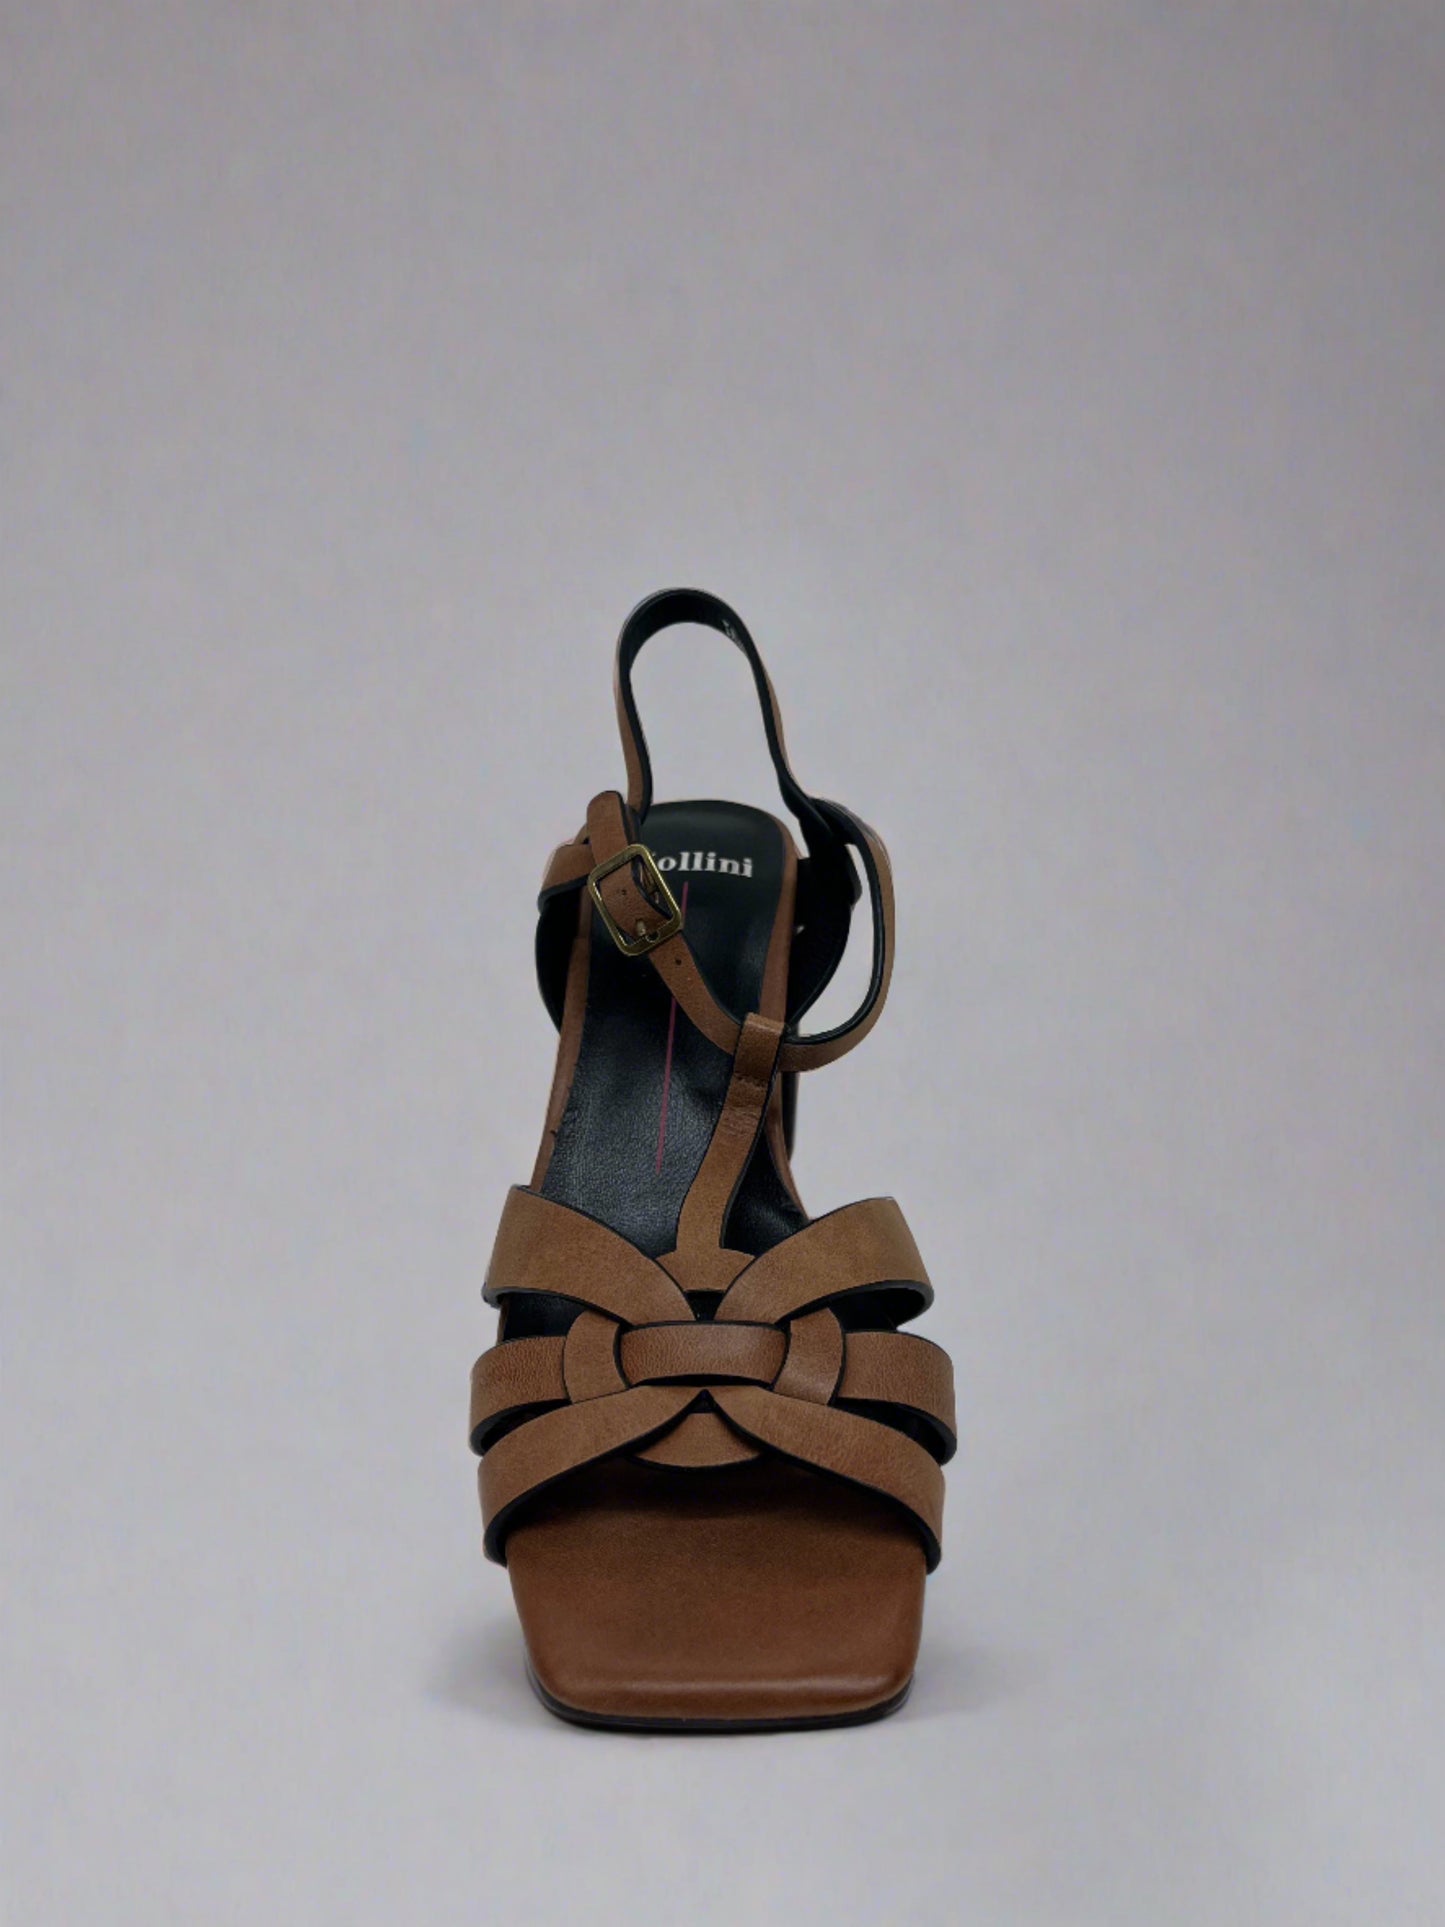 TAINTED BLOCK HEEL - MOLLINI - 36, 37, 38, 39, 40, 41, womens footwear - Stomp Shoes Darwin